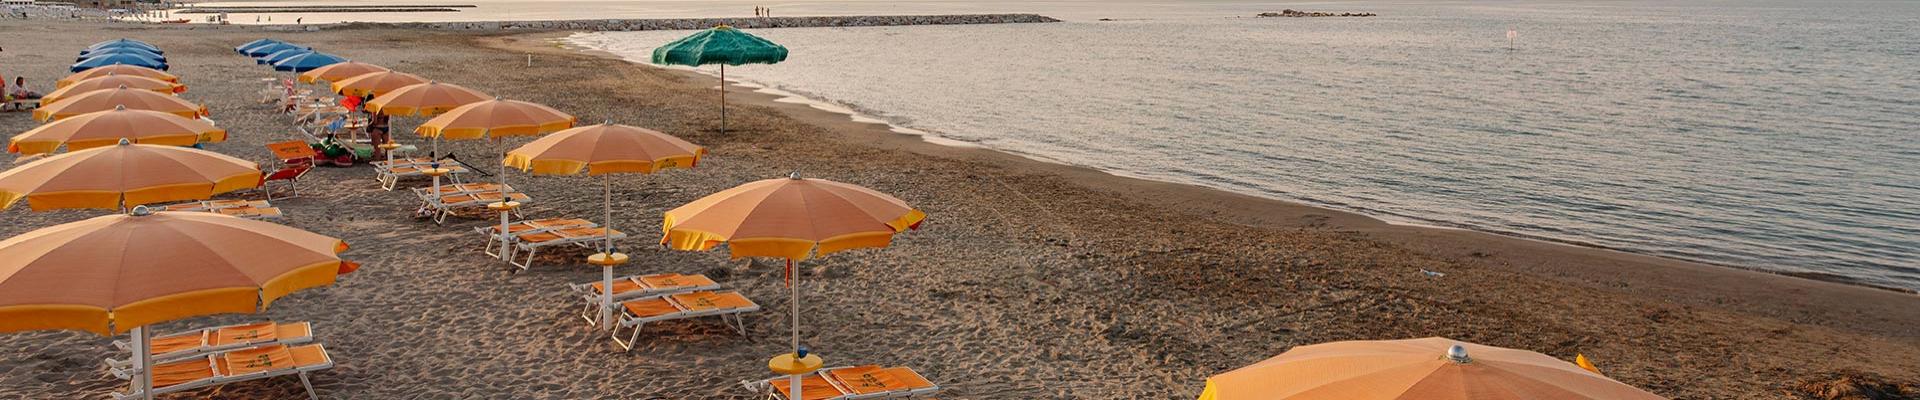 campinglakeplacid en en-senior-offer-in-beach-holiday-for-over-65-evergreen-a-silvi-marina-in-abruzzo 010